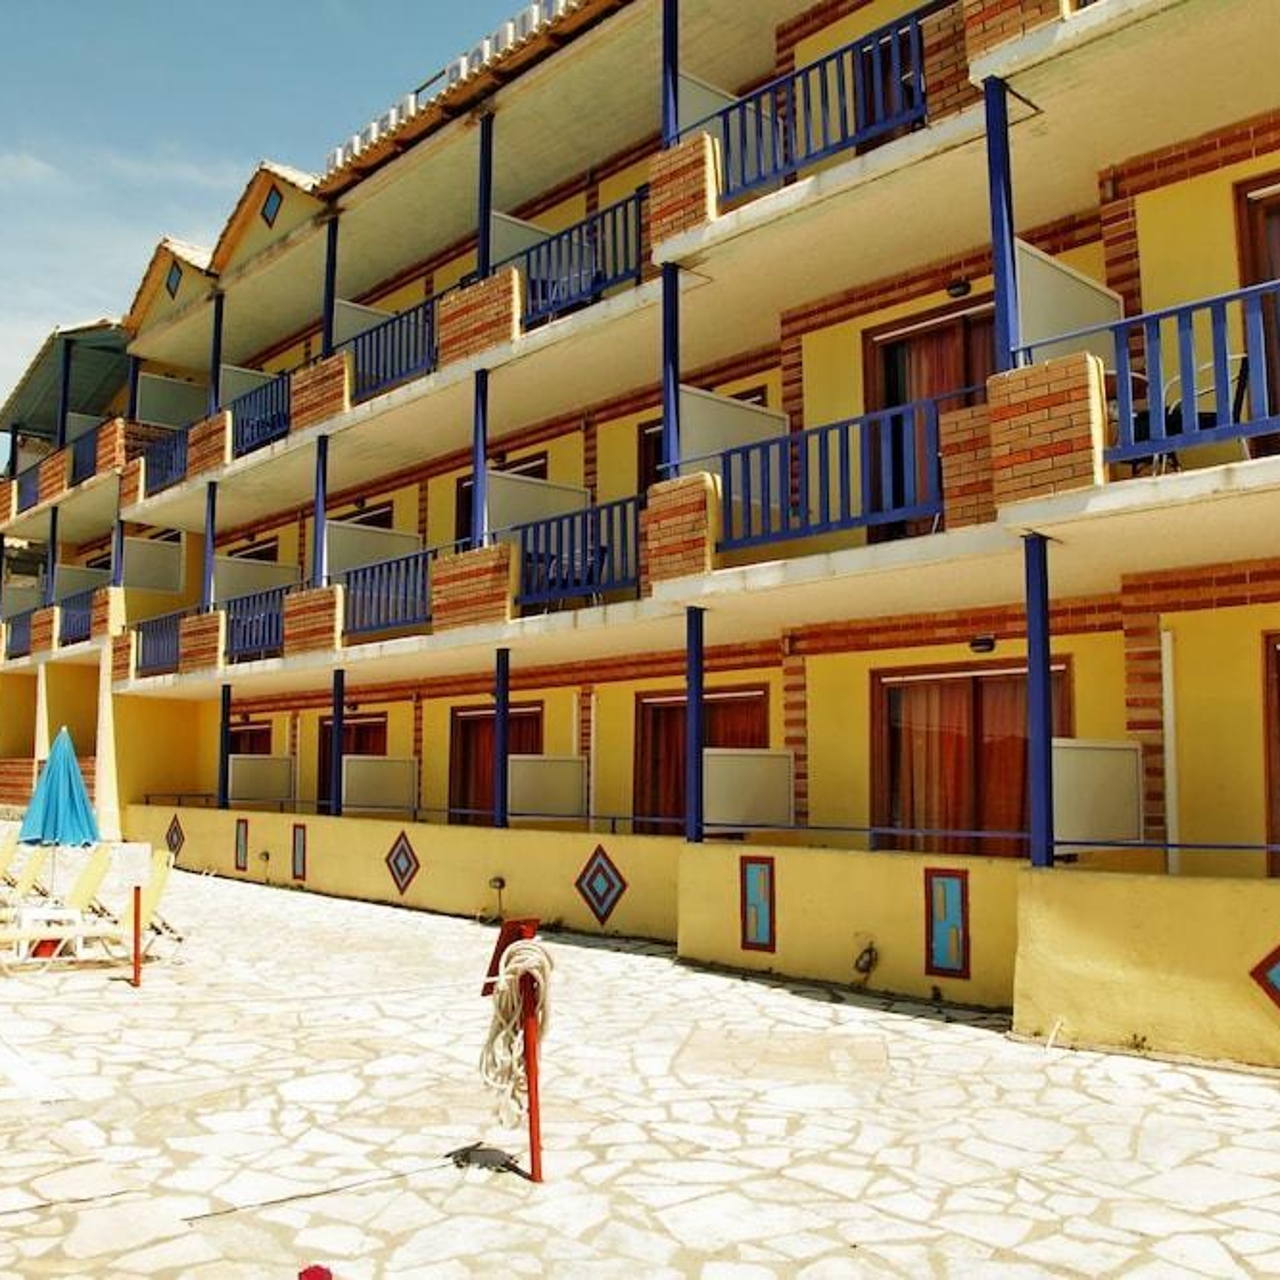 Politia Hotel - 3 HRS star hotel in Lefkada (Ionian Islands)